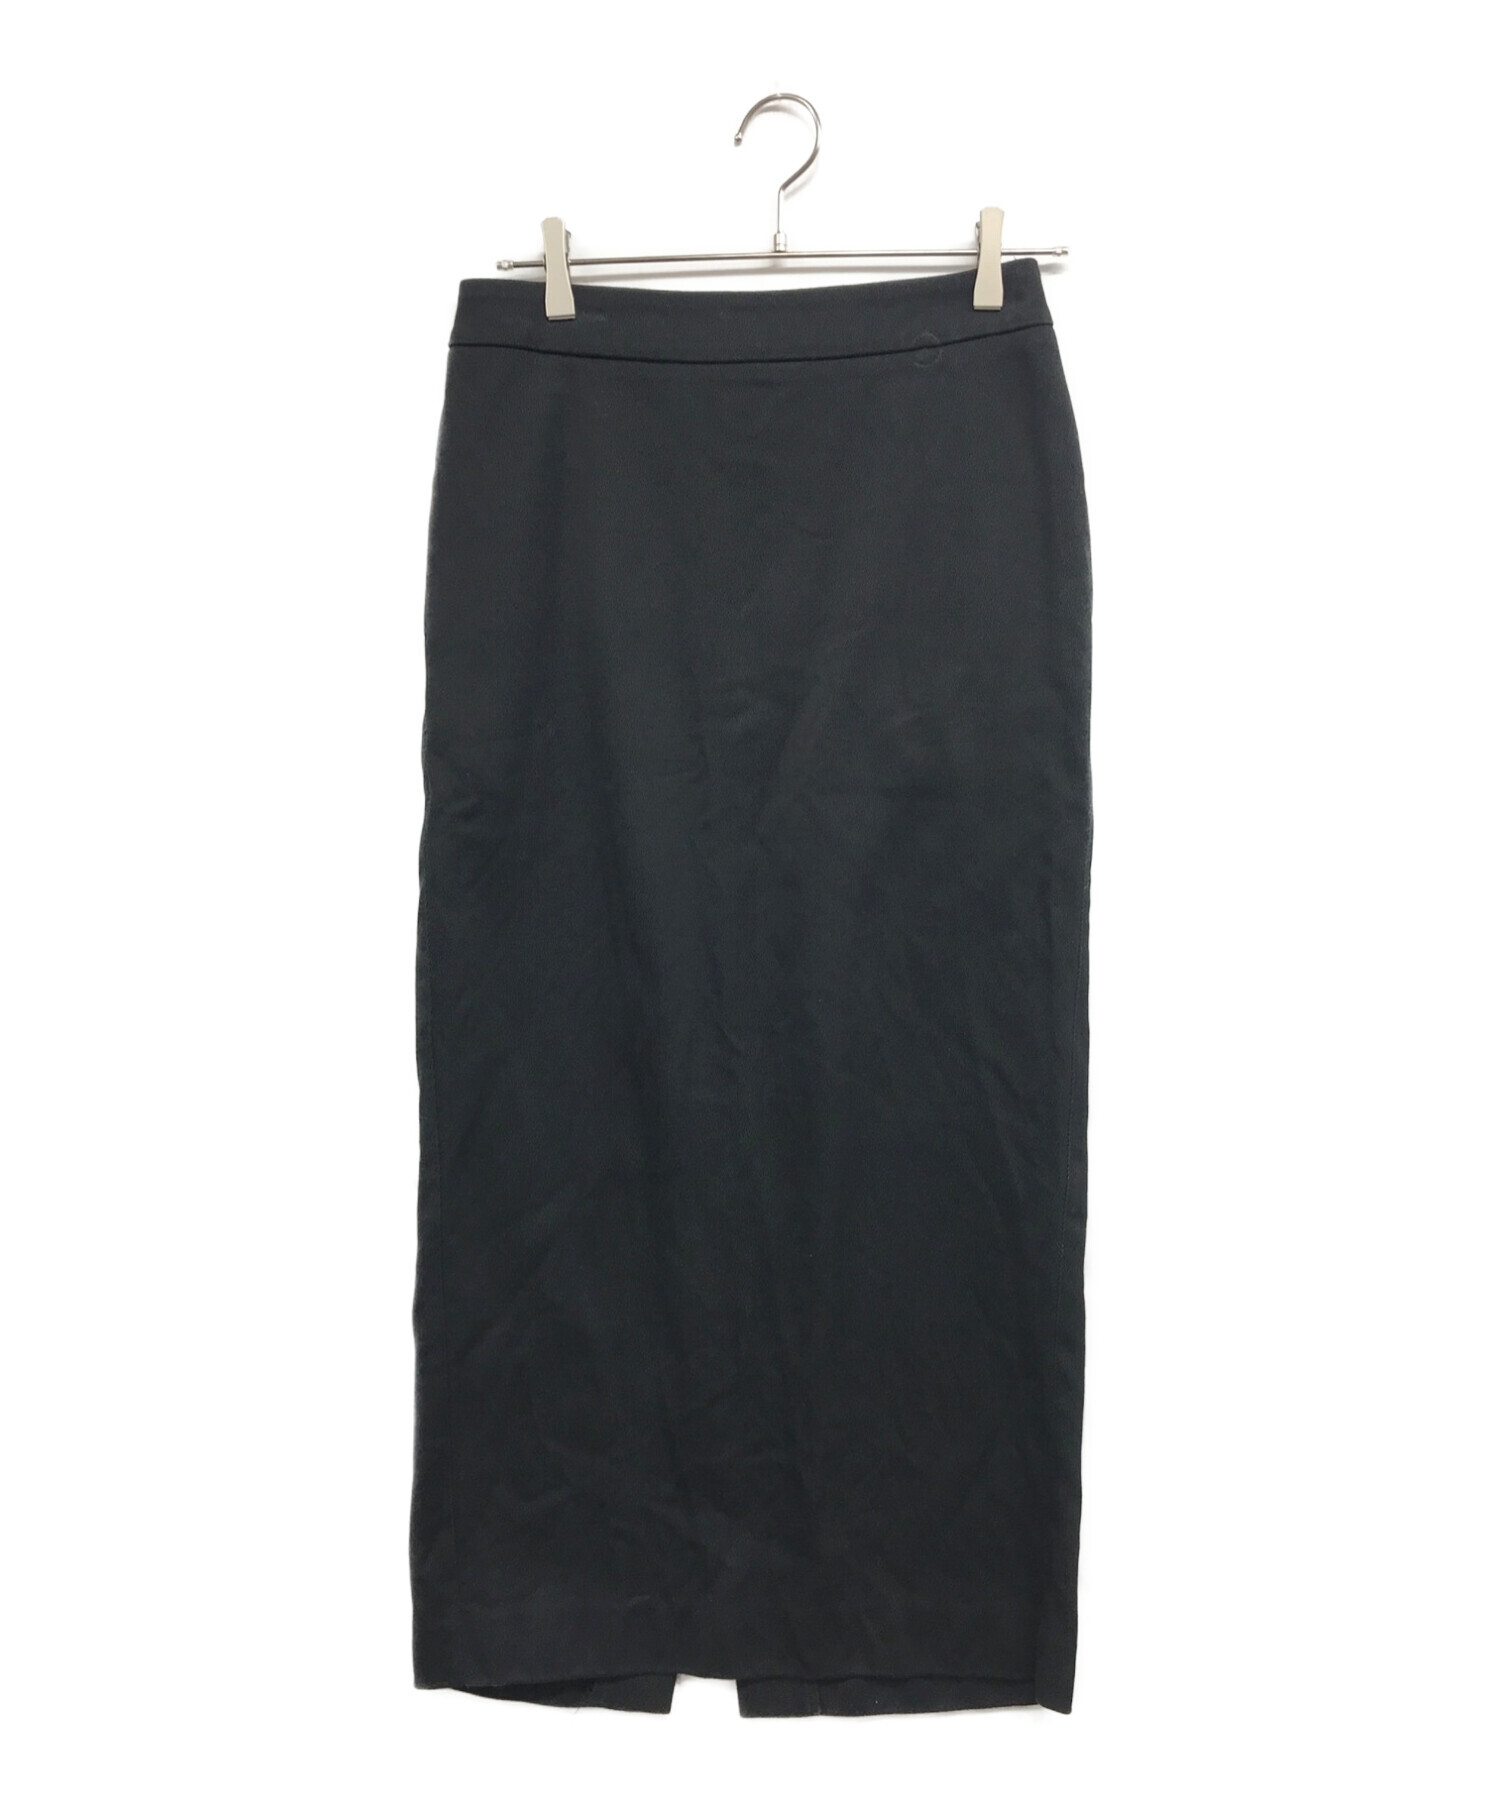 Deuxieme Classe elegance tight スカート 黒 - ロングスカート